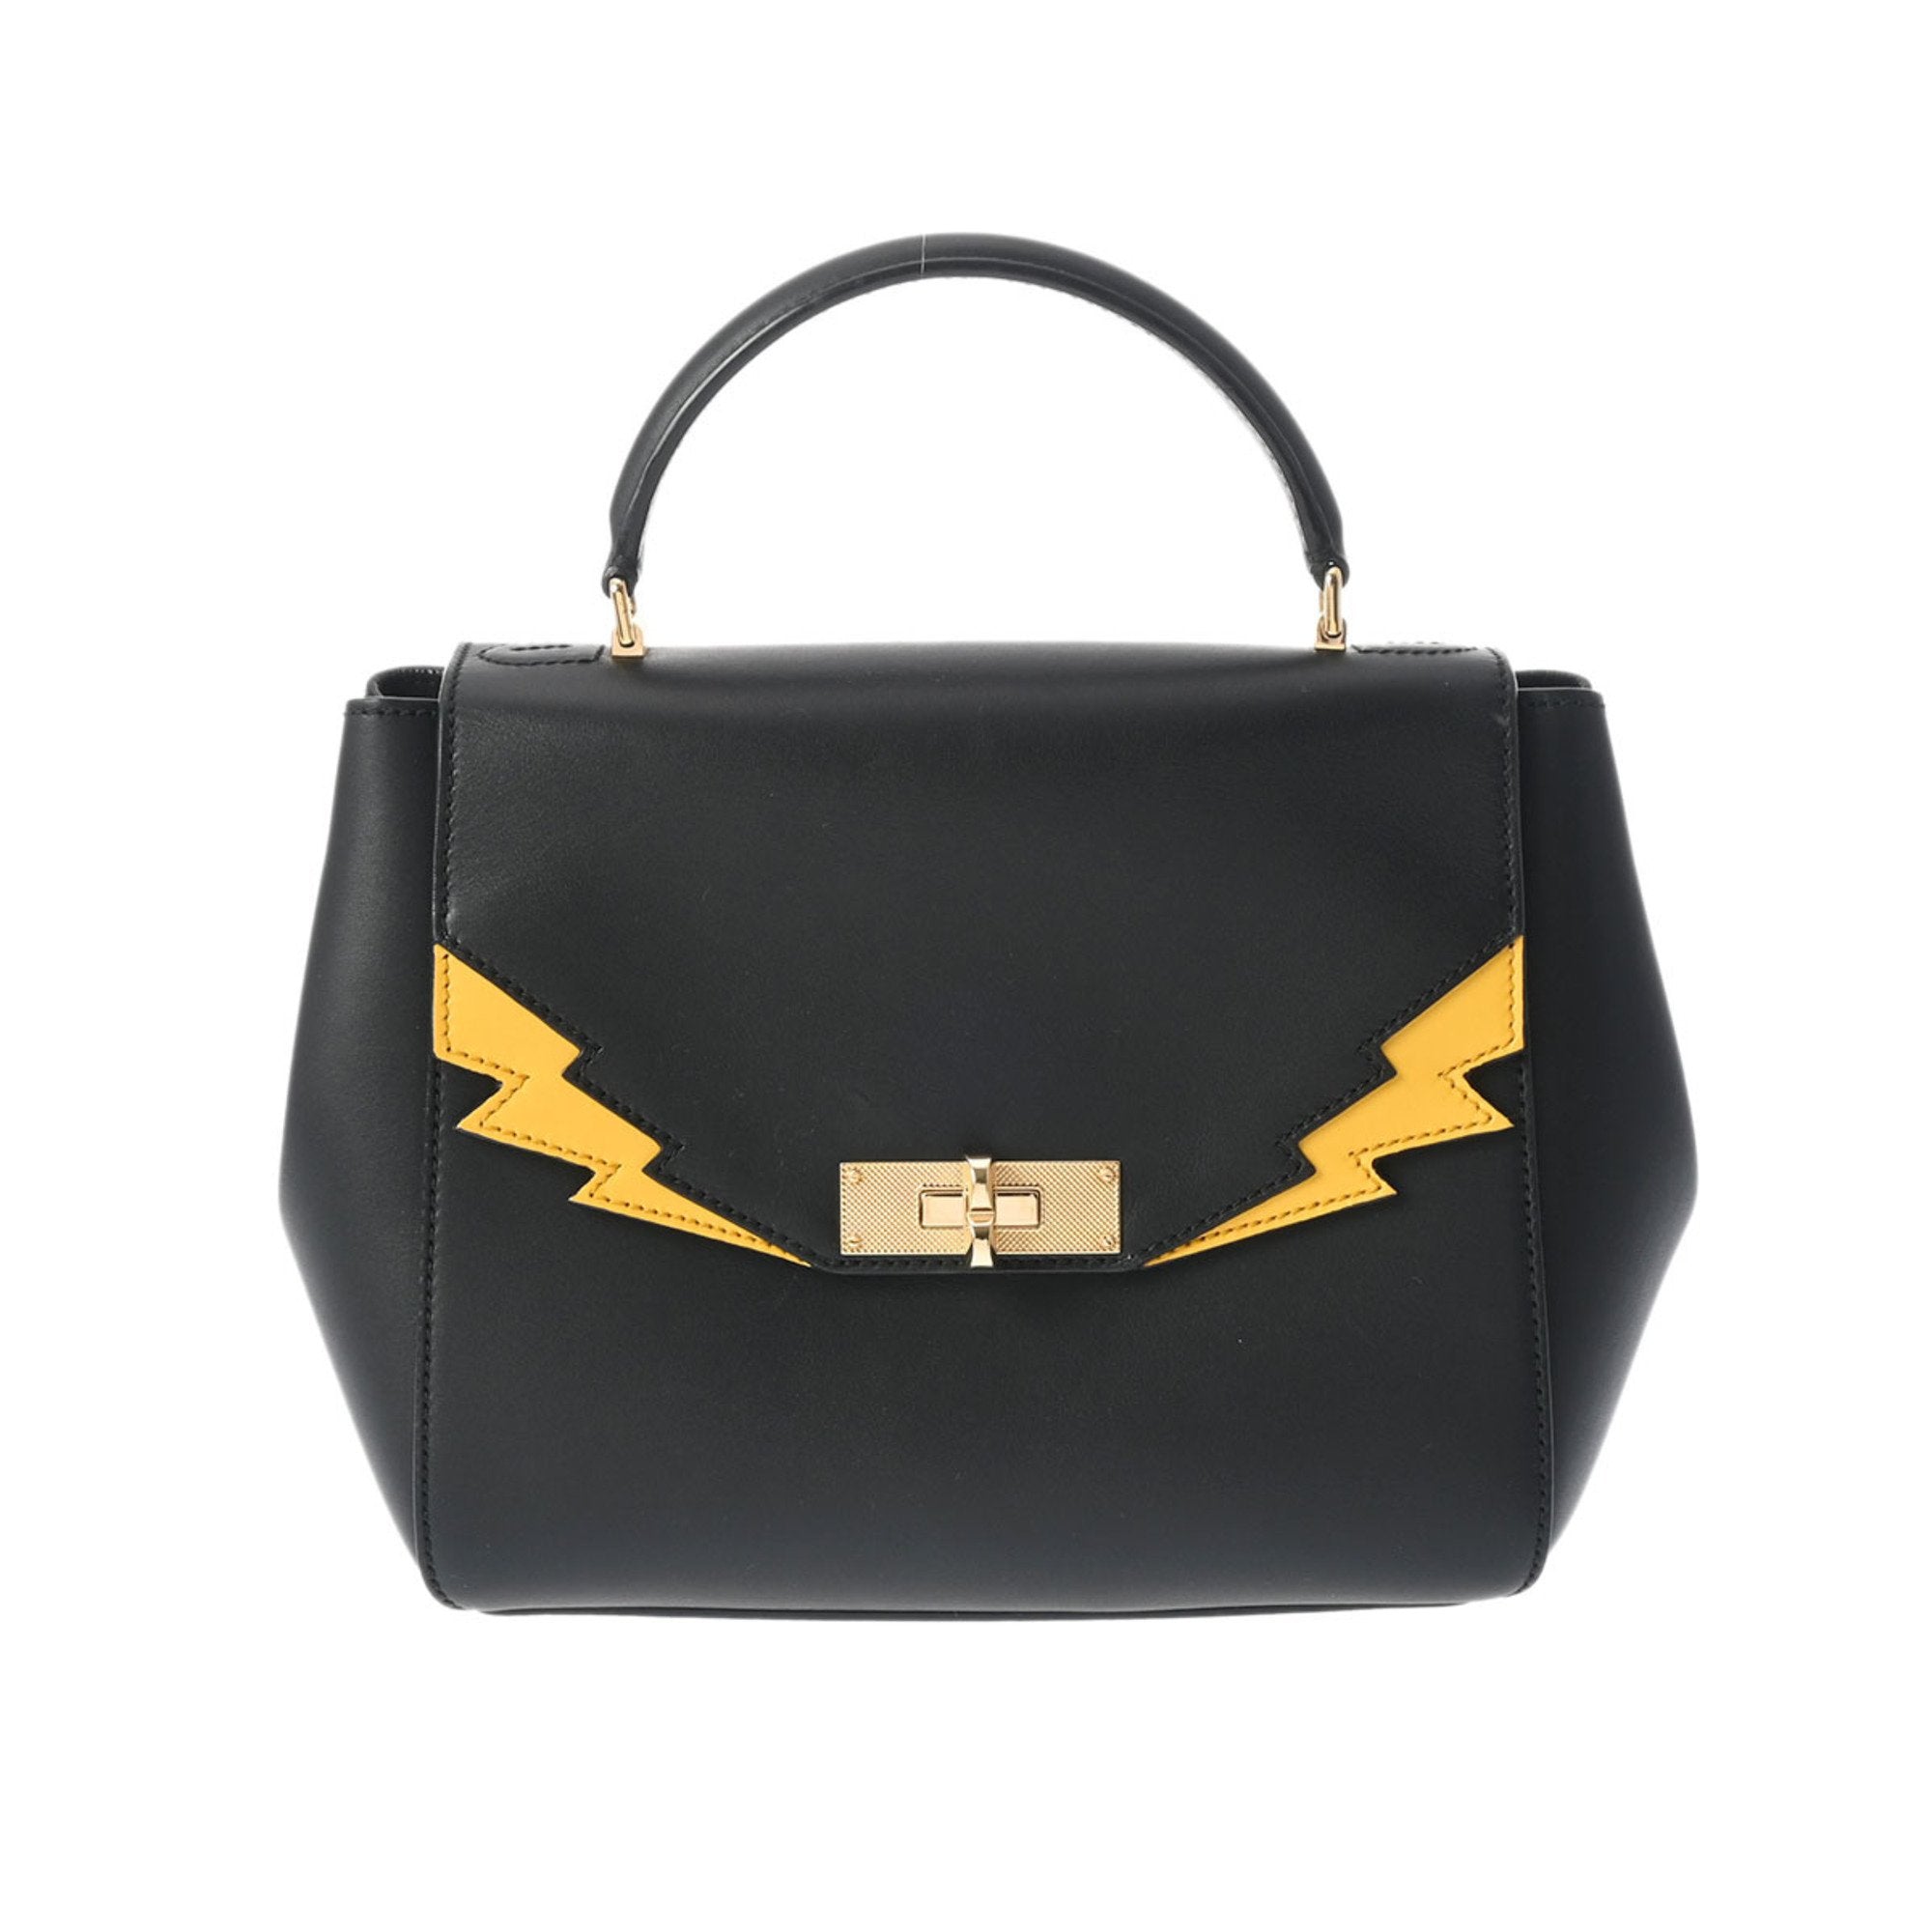 B TURN SM Black/ Women's Calfskin Handbag